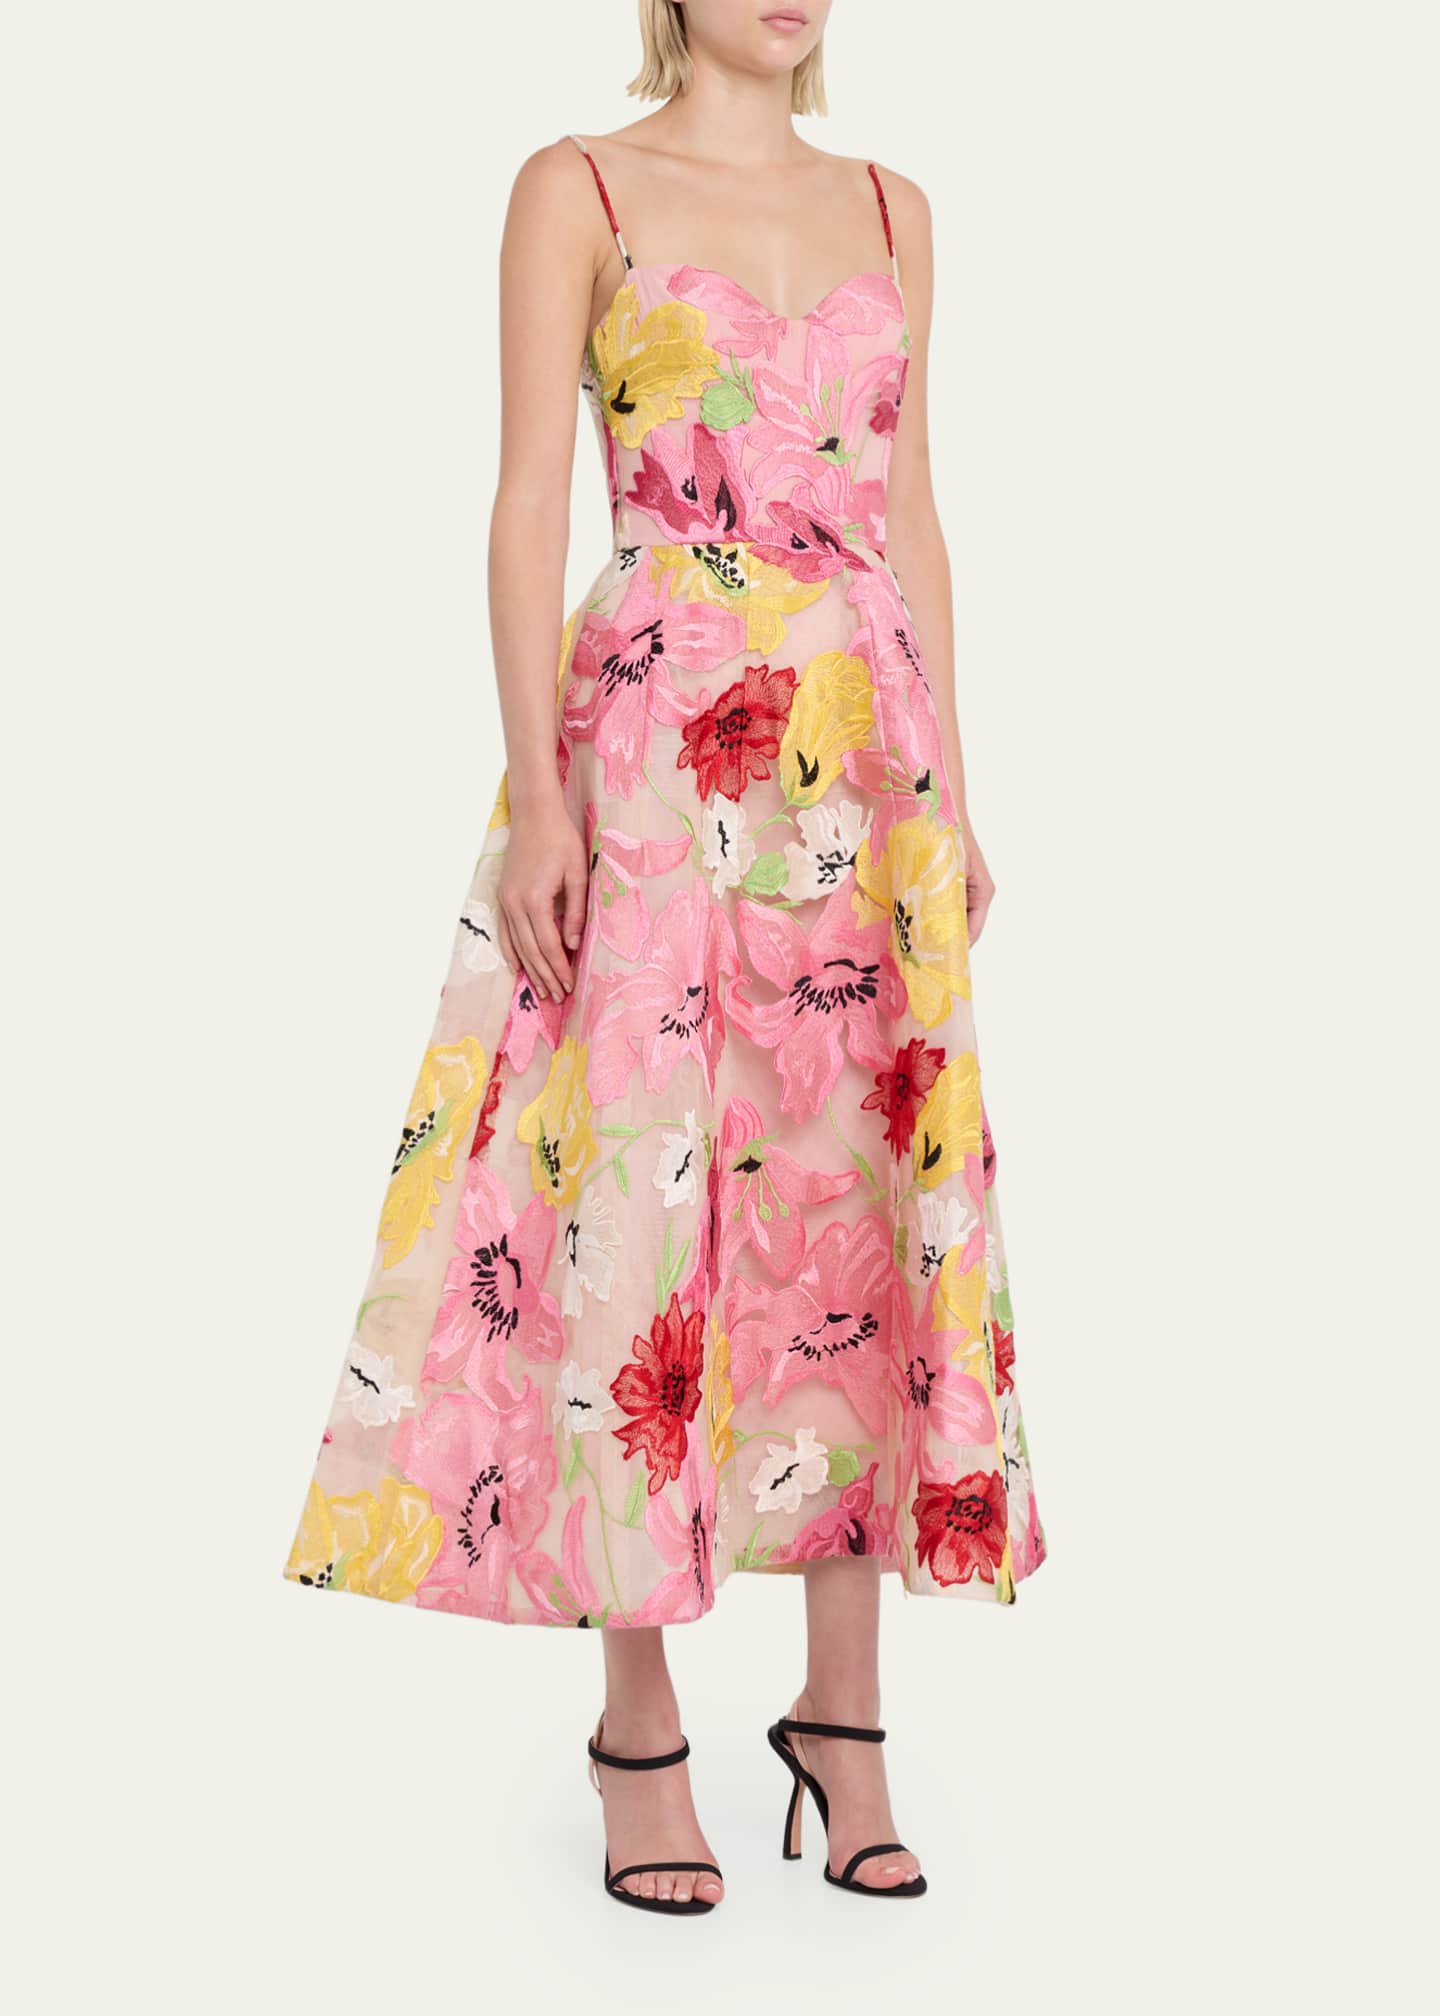 Monique Lhuillier Floral-Embroidered Flared Skirt Dress - Bergdorf Goodman